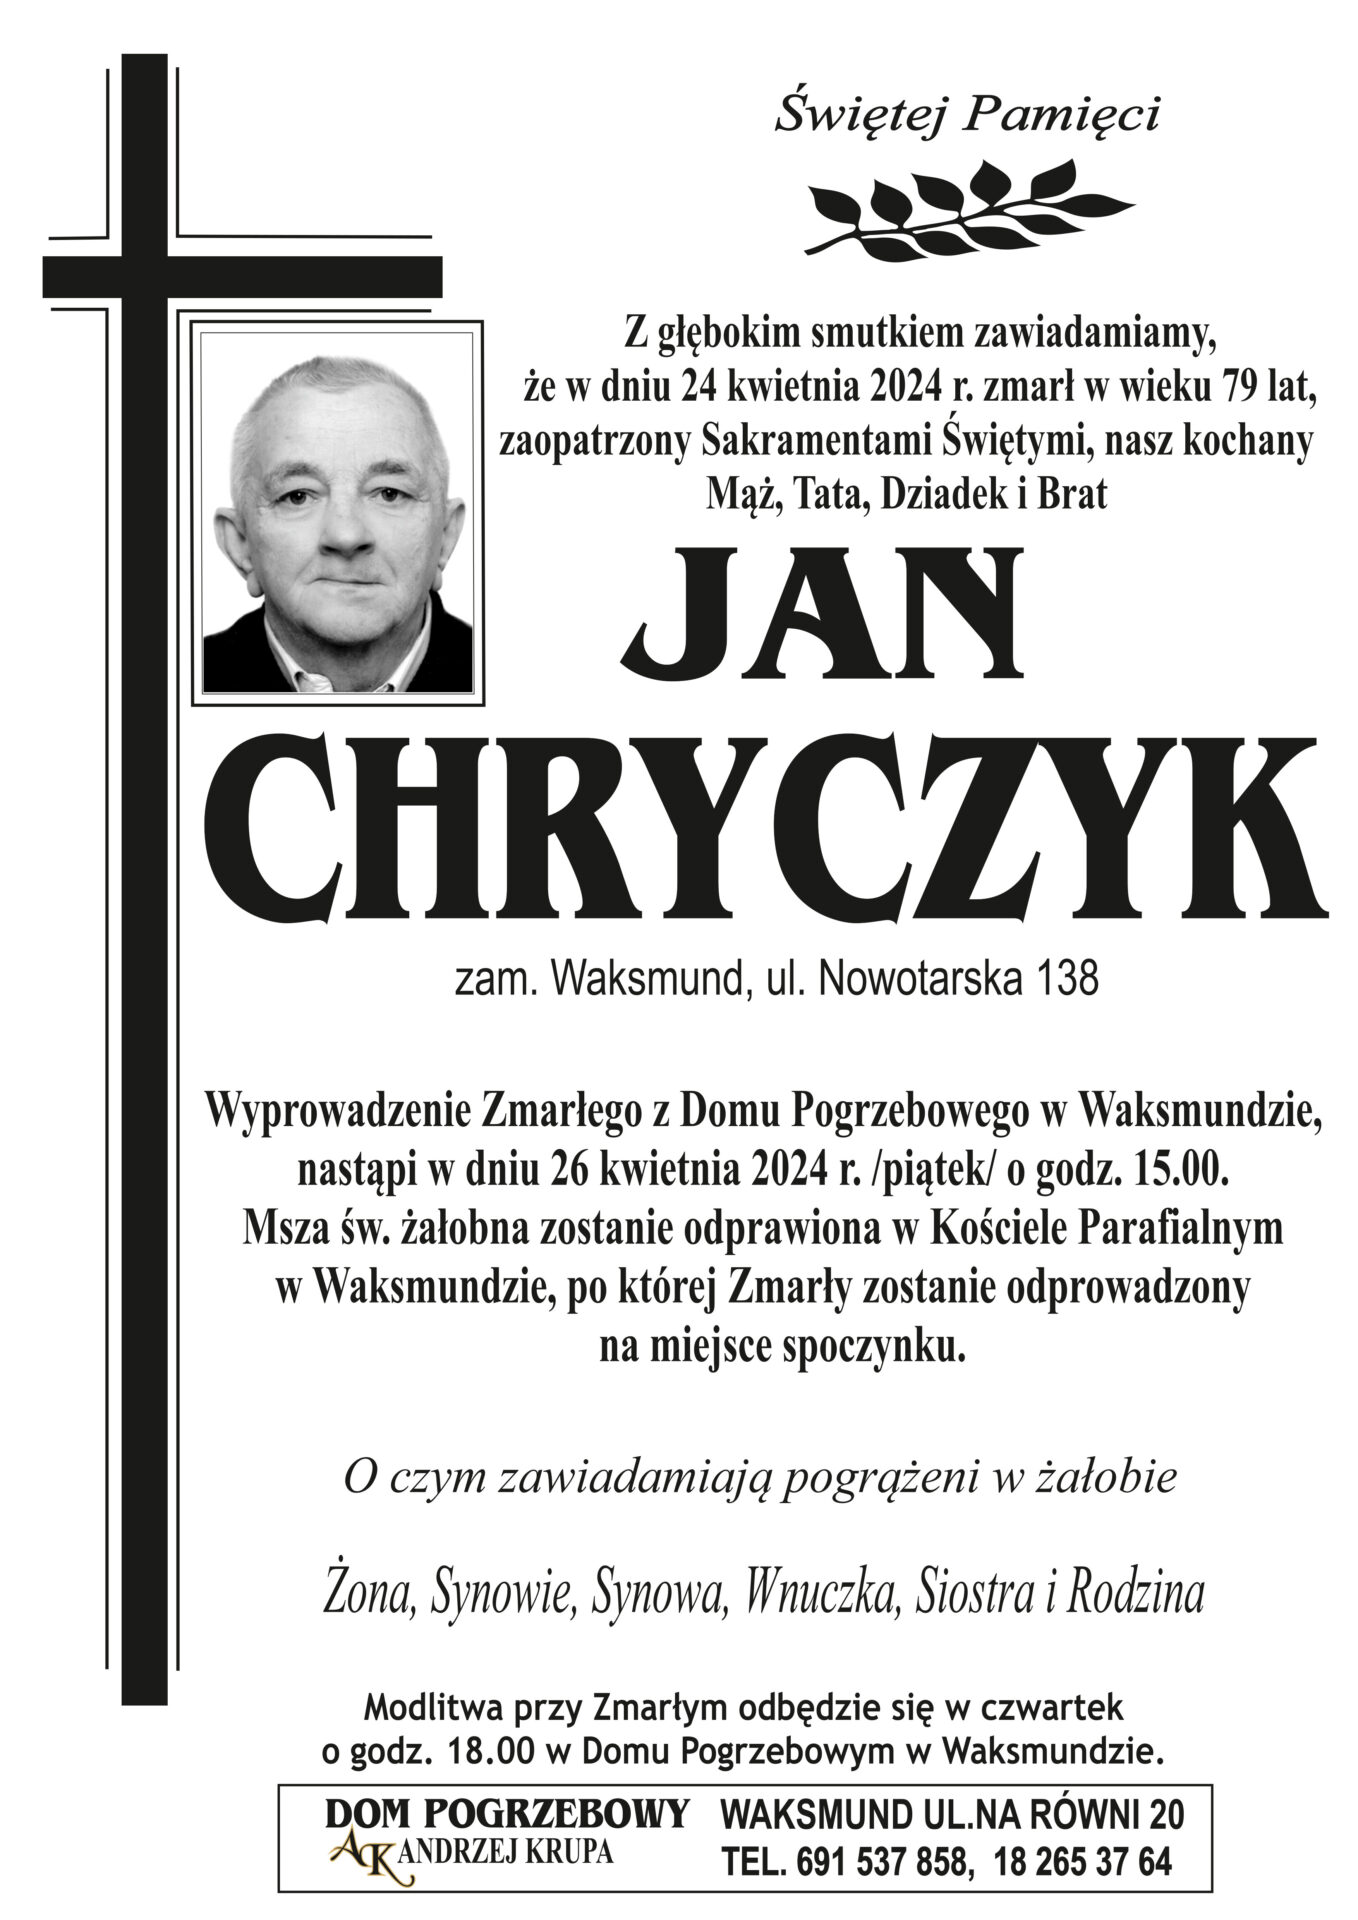 Jan Chryczyk